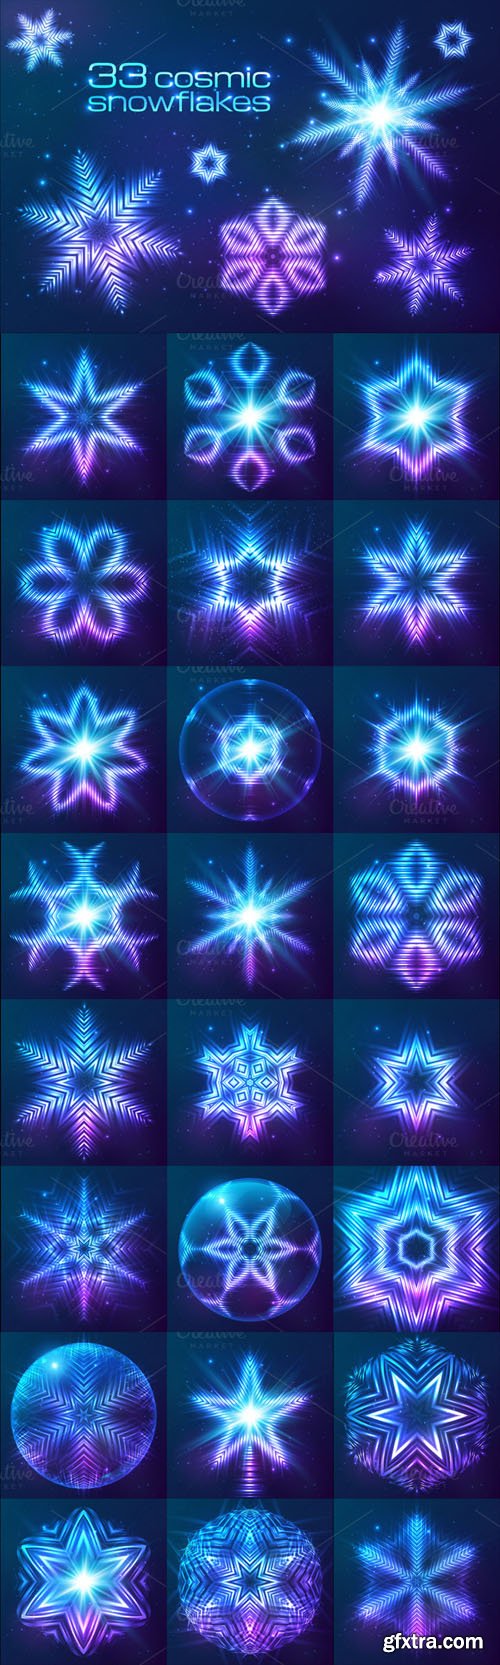 33 cosmic shining vector snowflakes - CM 100495